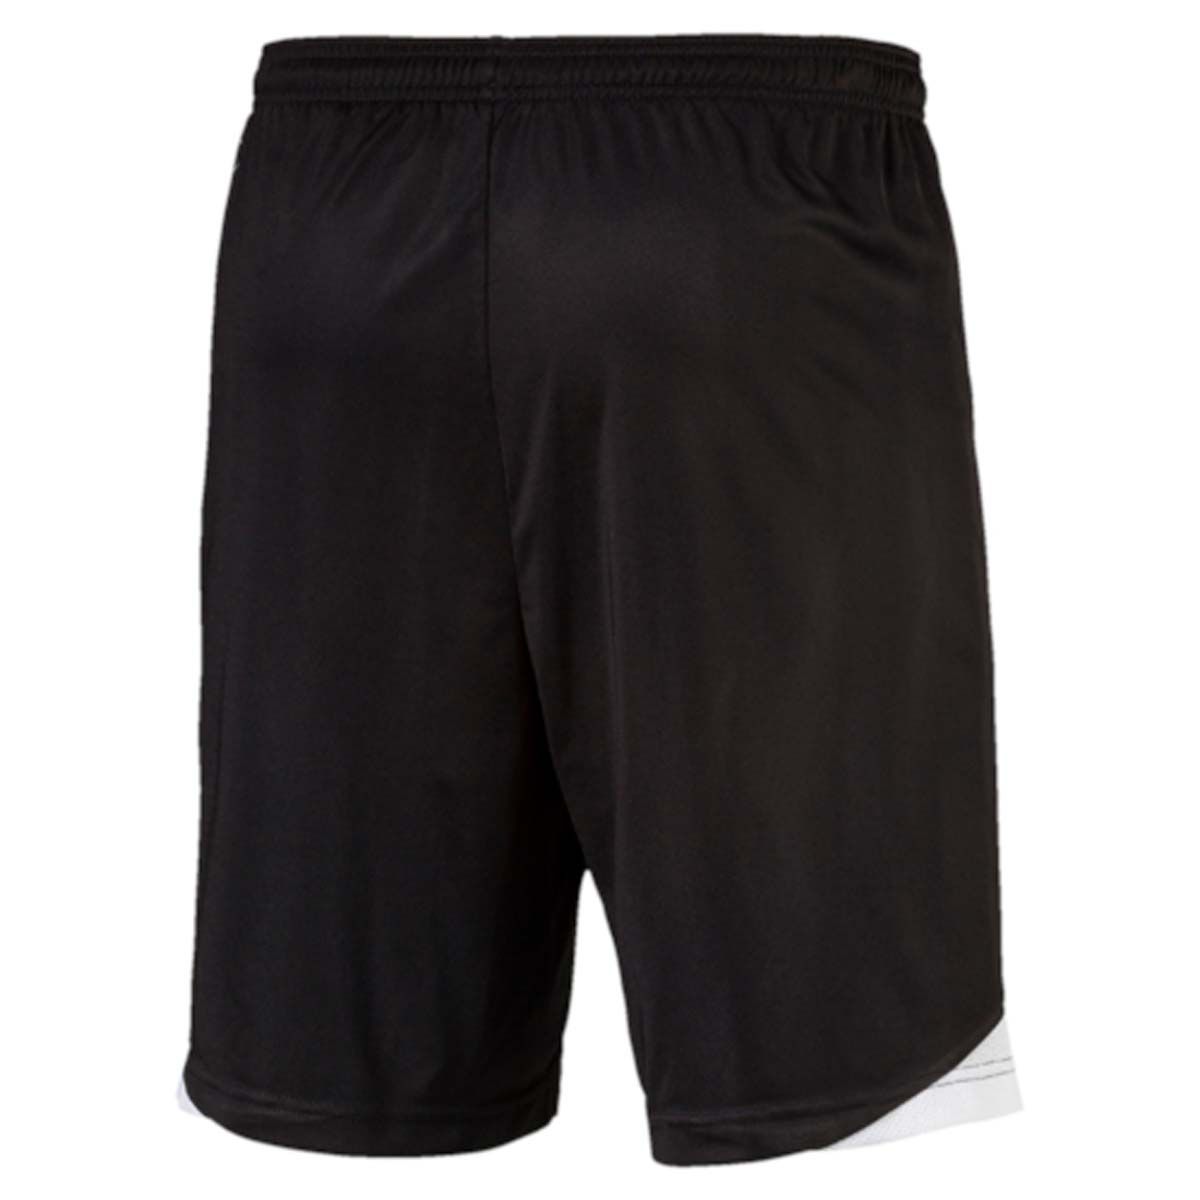   Puma FtblTRG Shorts, : , . 655208_03.  L (48/50)